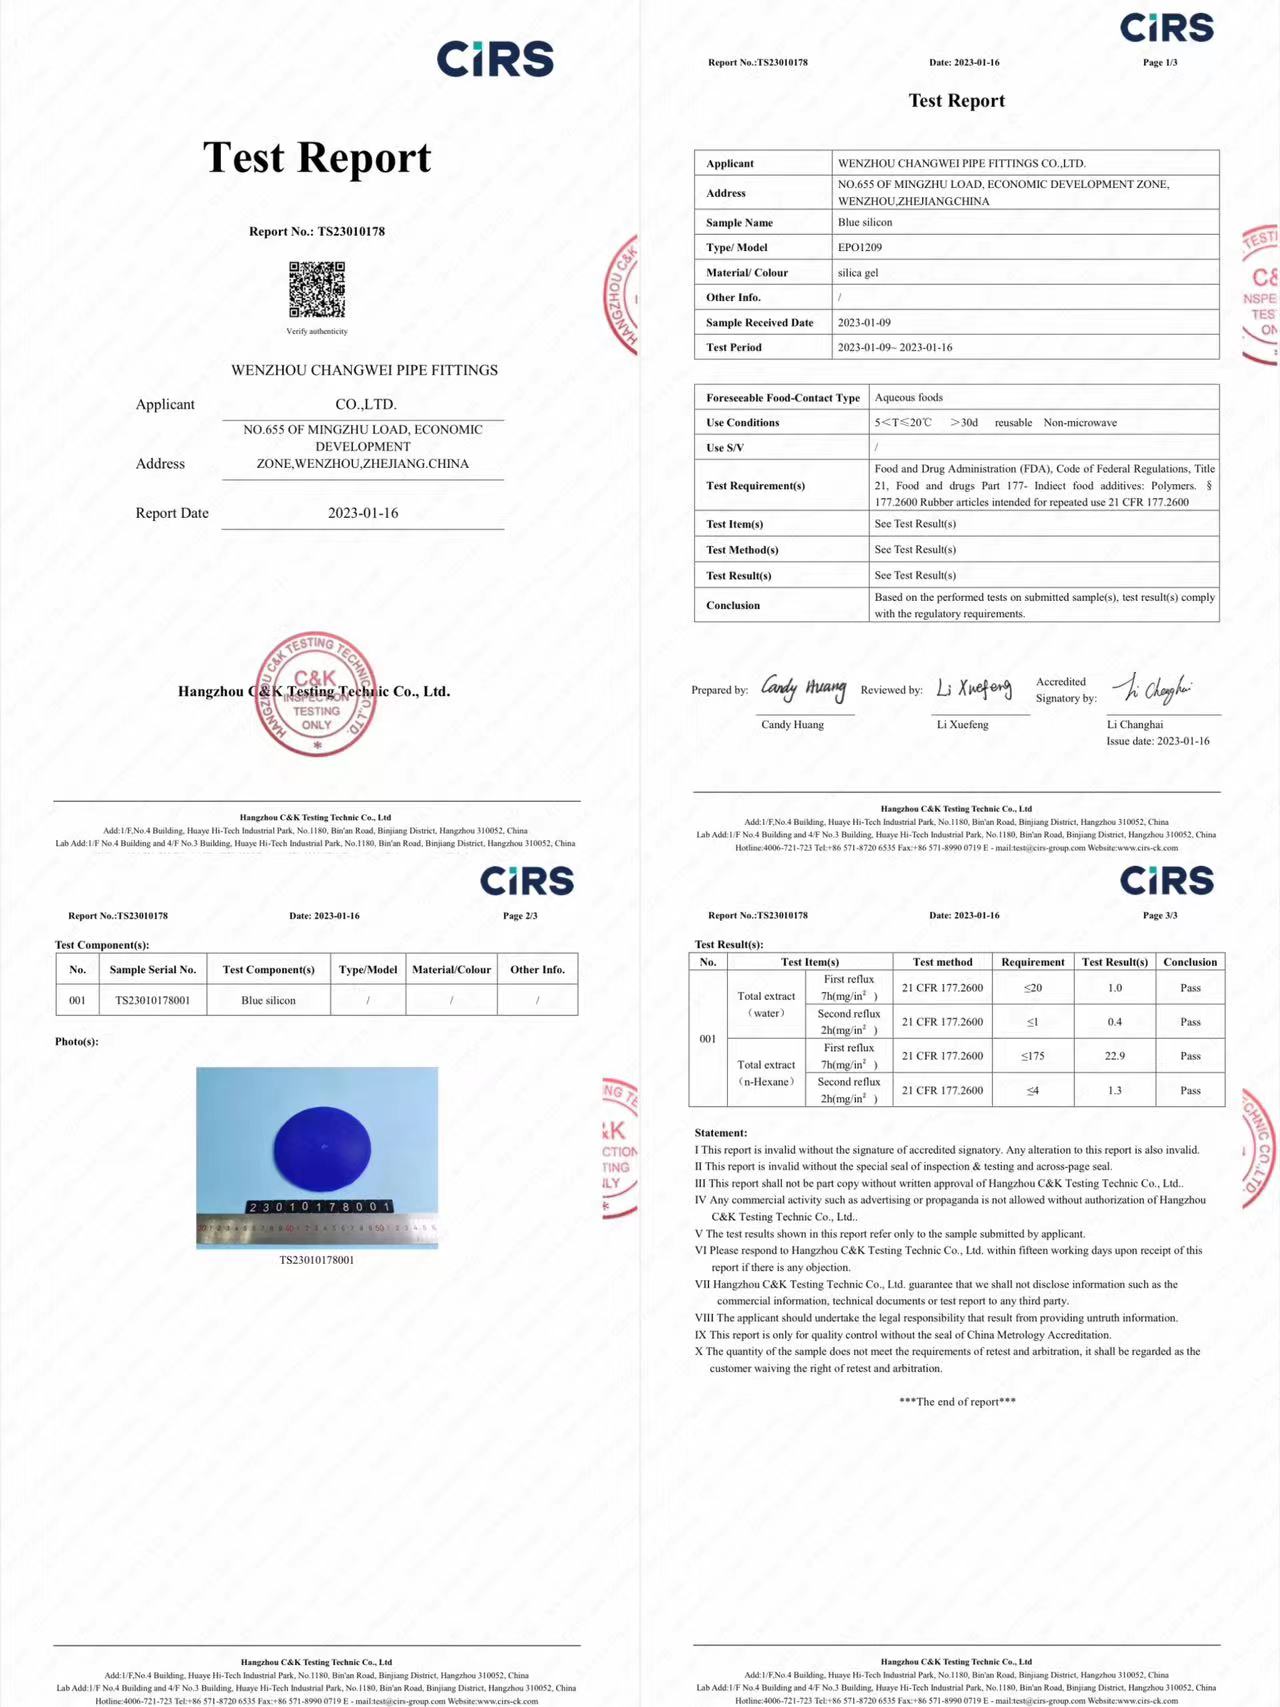 FDA test certificate for Blue silicone